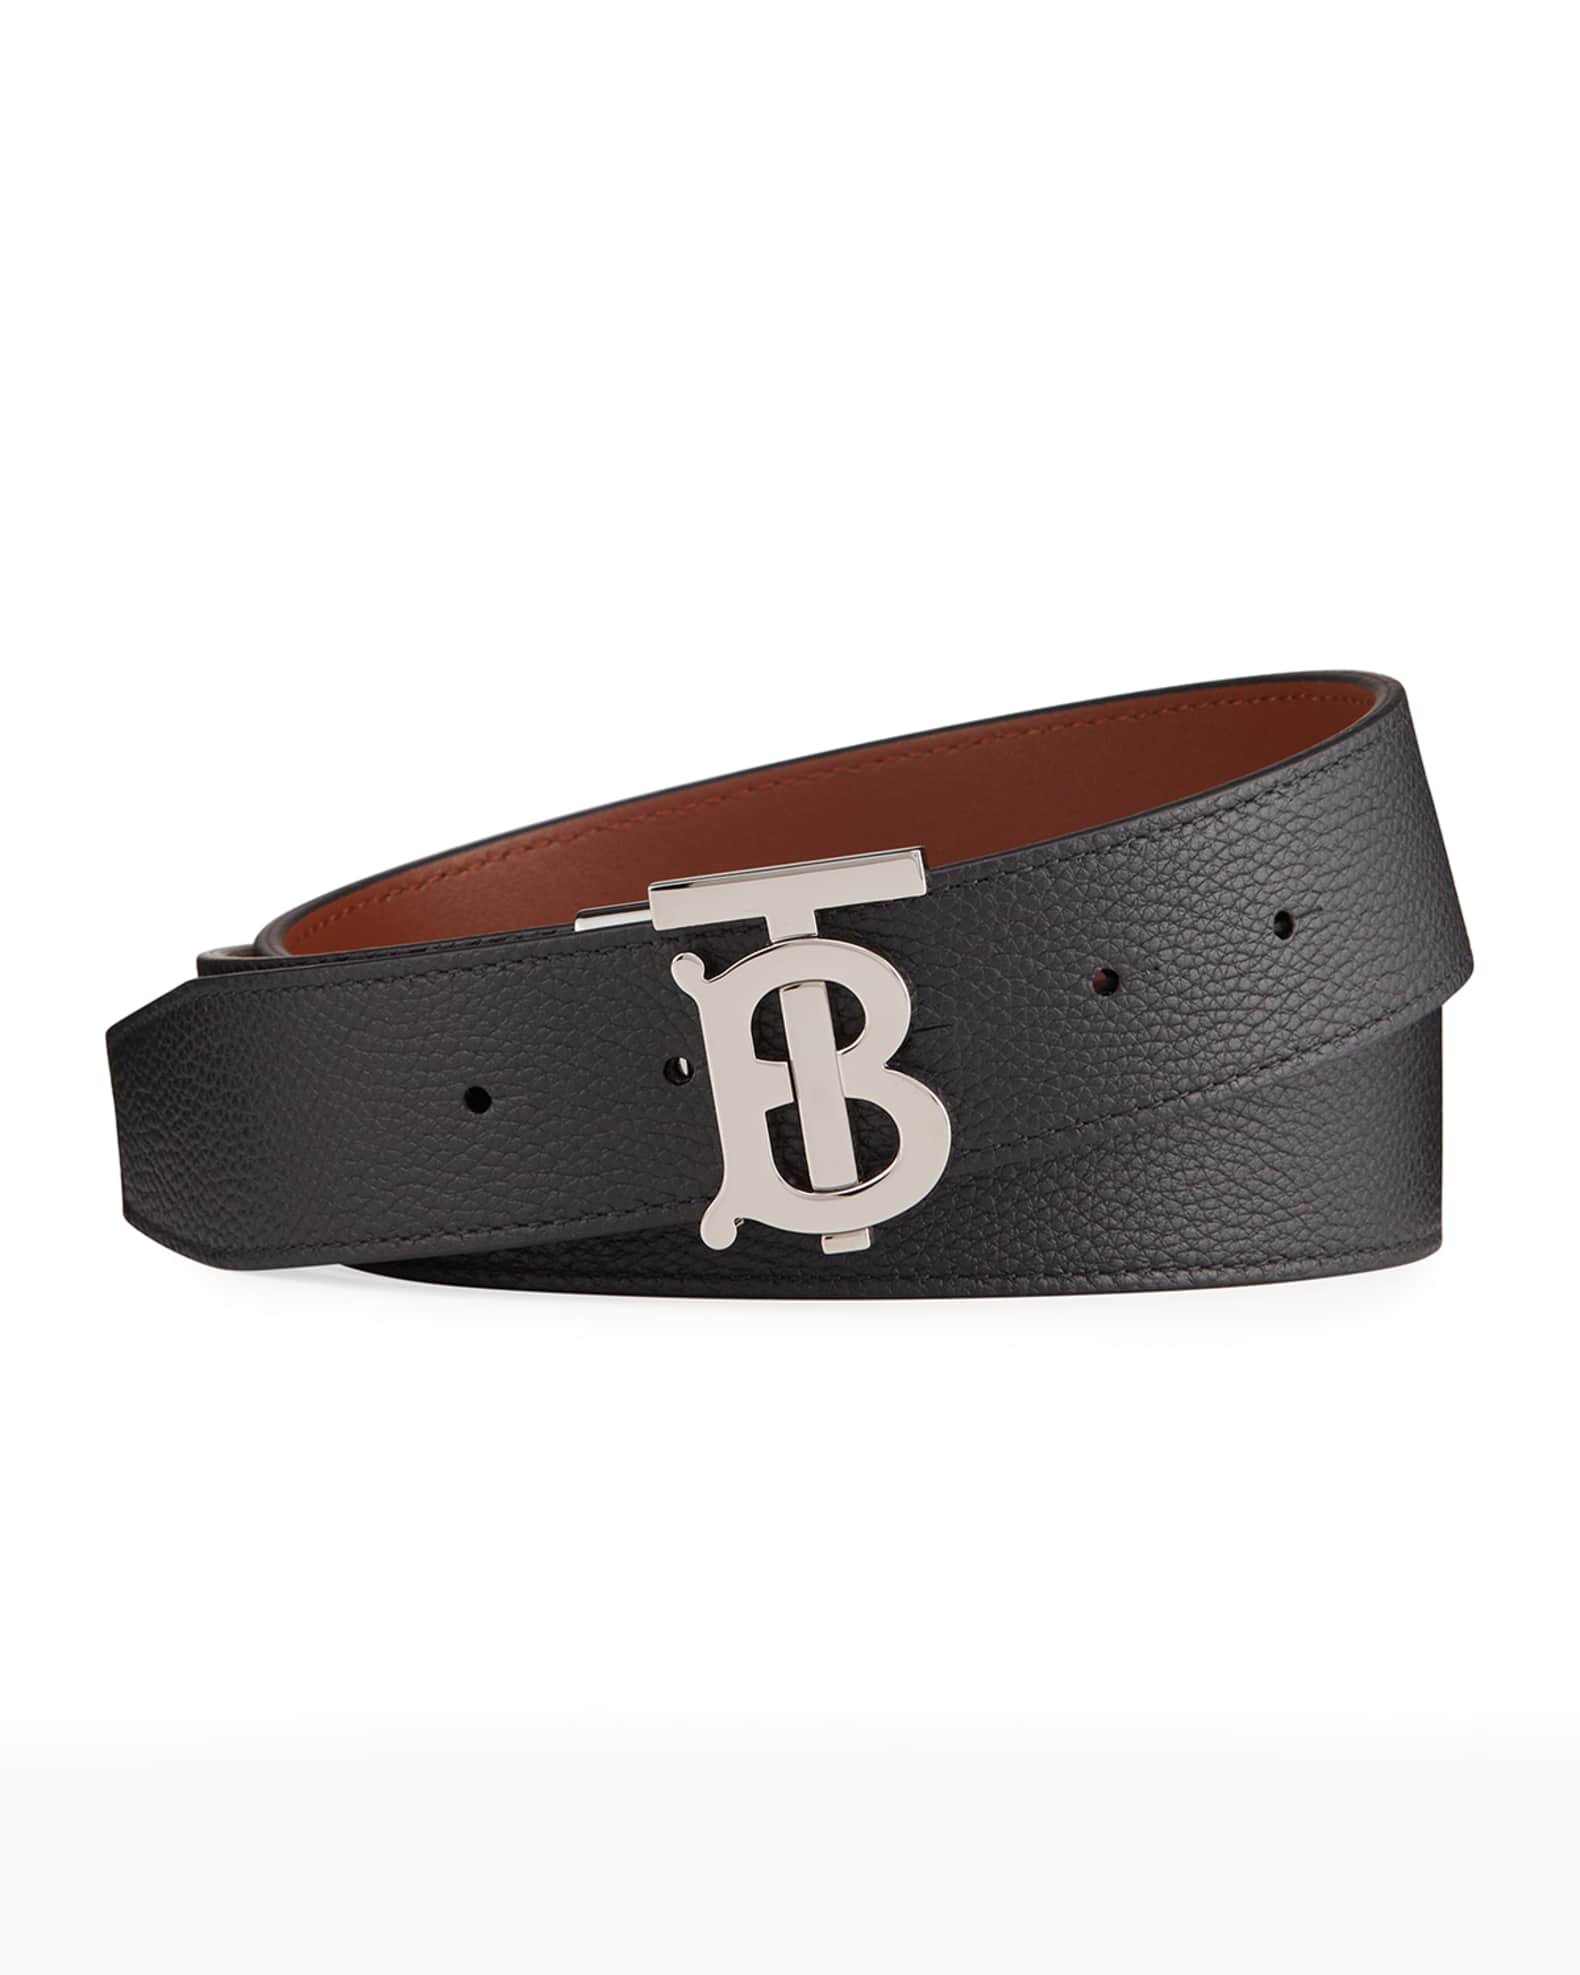 Burberry B-Buckle Leather Belt